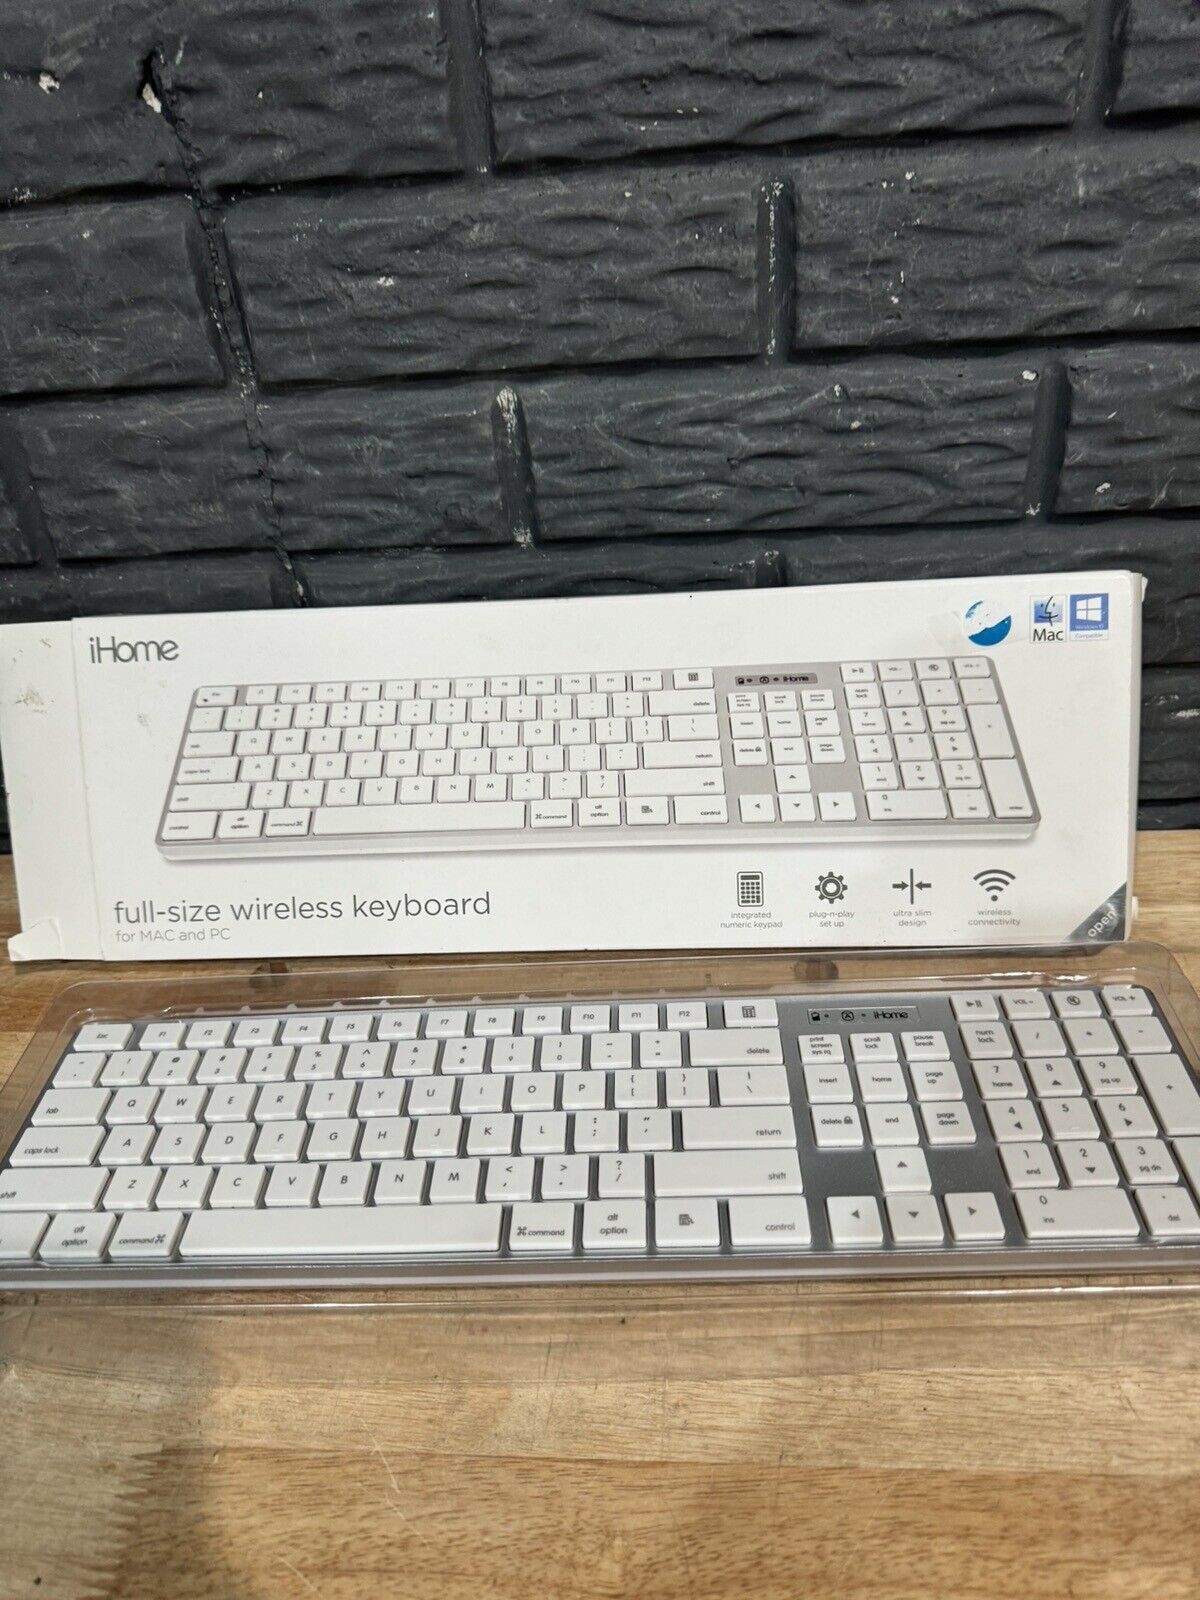 iHome IMAC full -size wireless keyboard with 2.4G Nano Receiver